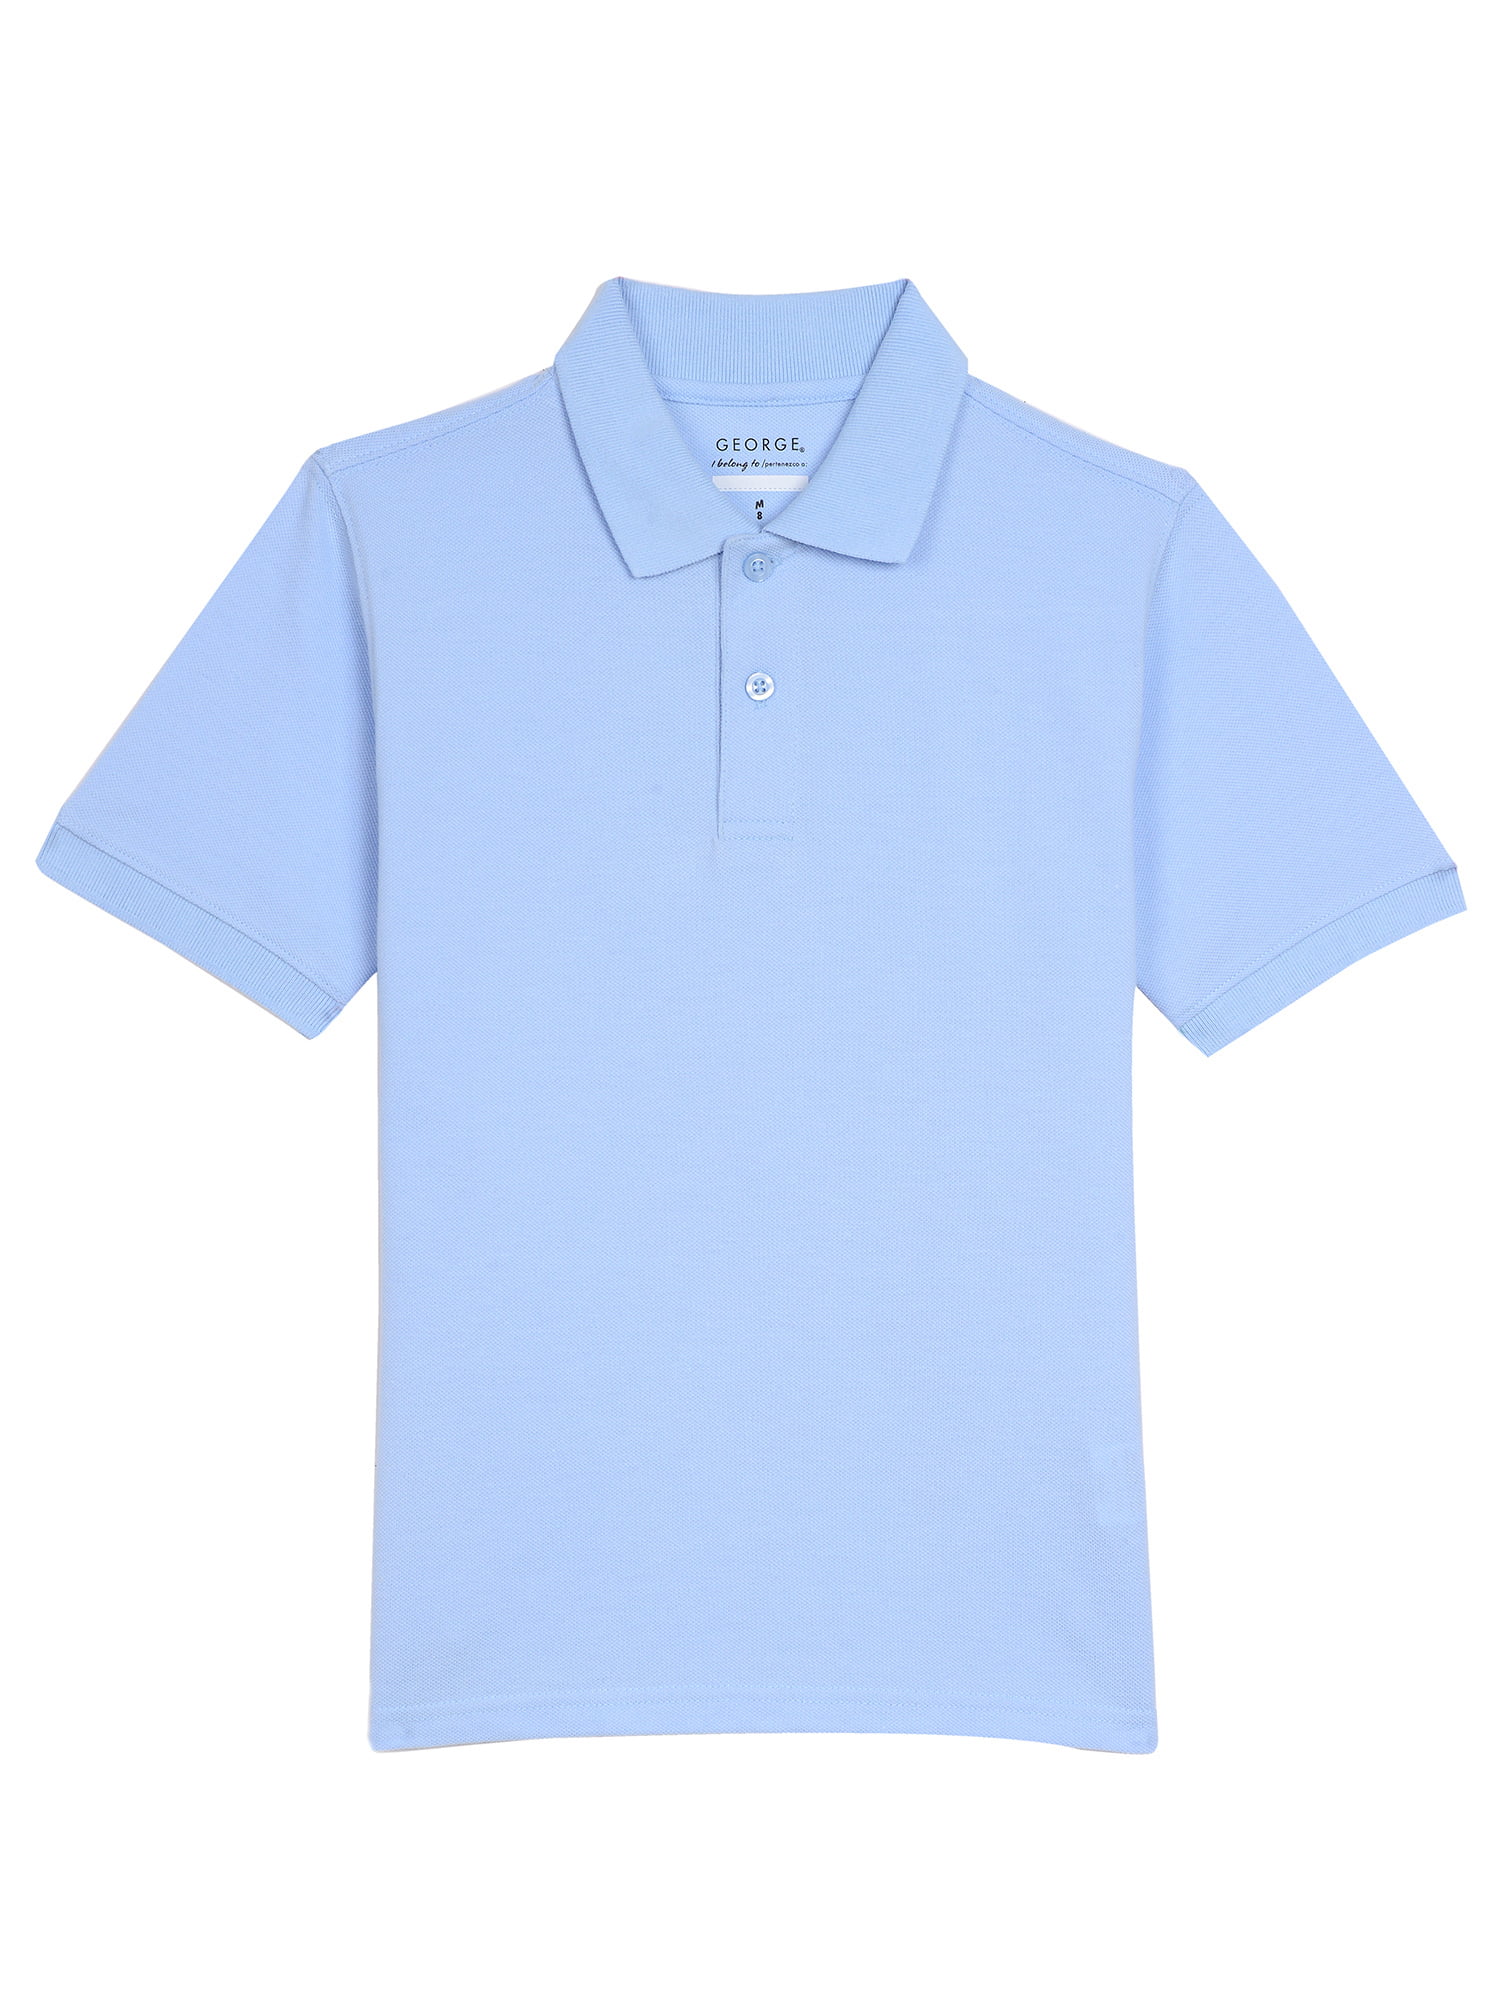 George Boys School Uniforms Long Sleeve Pique Polo Shirt -A3 